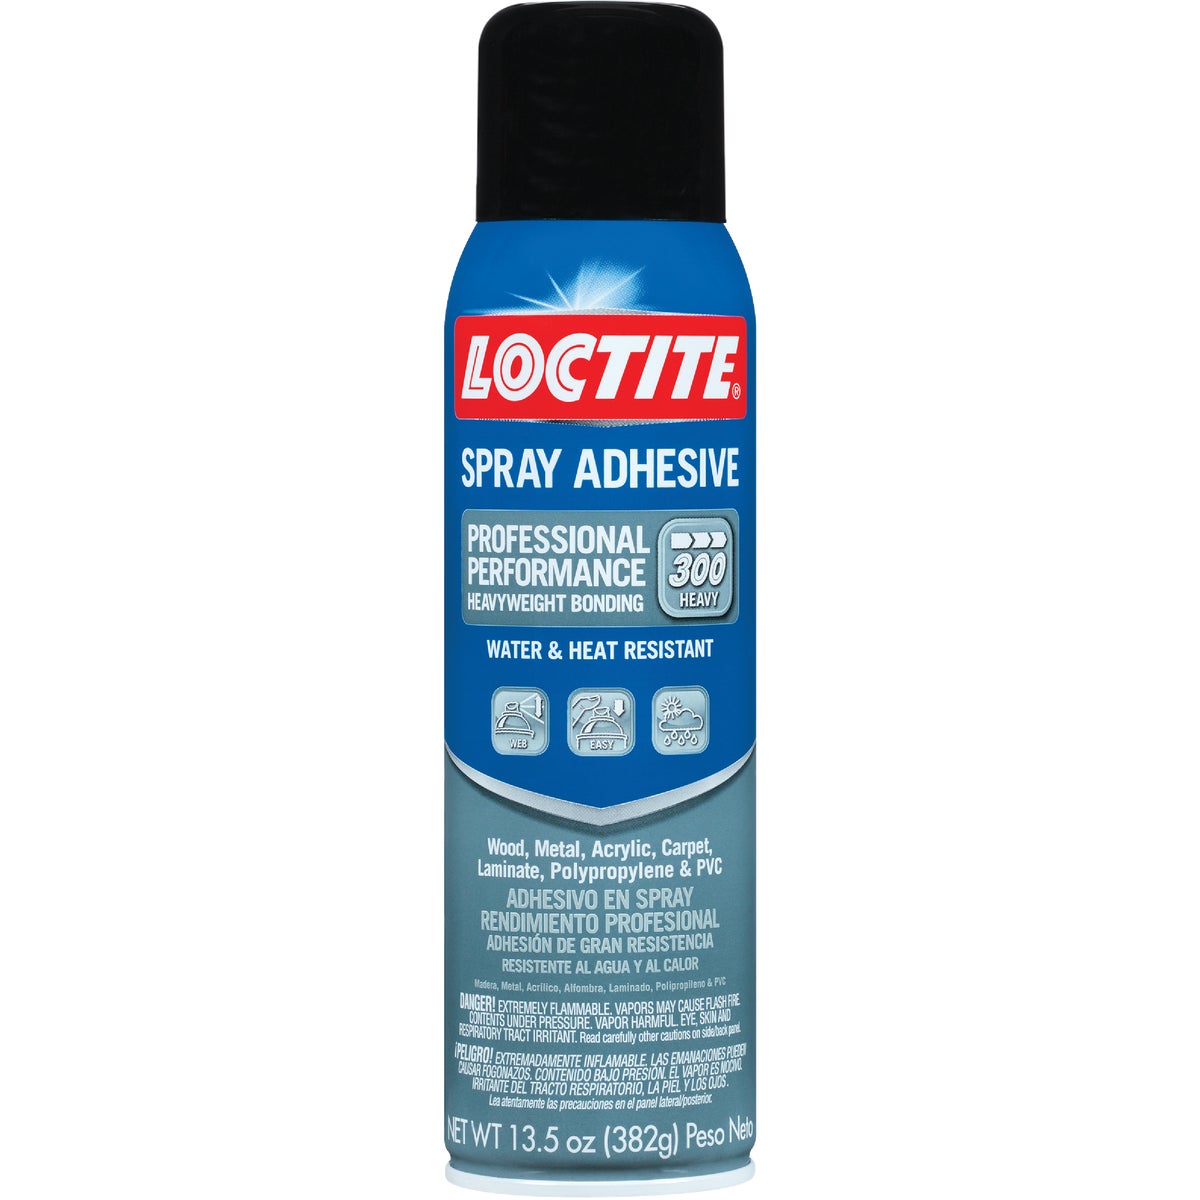 Item 363546, Loctite professional performance spray adhesive is a premium quality 